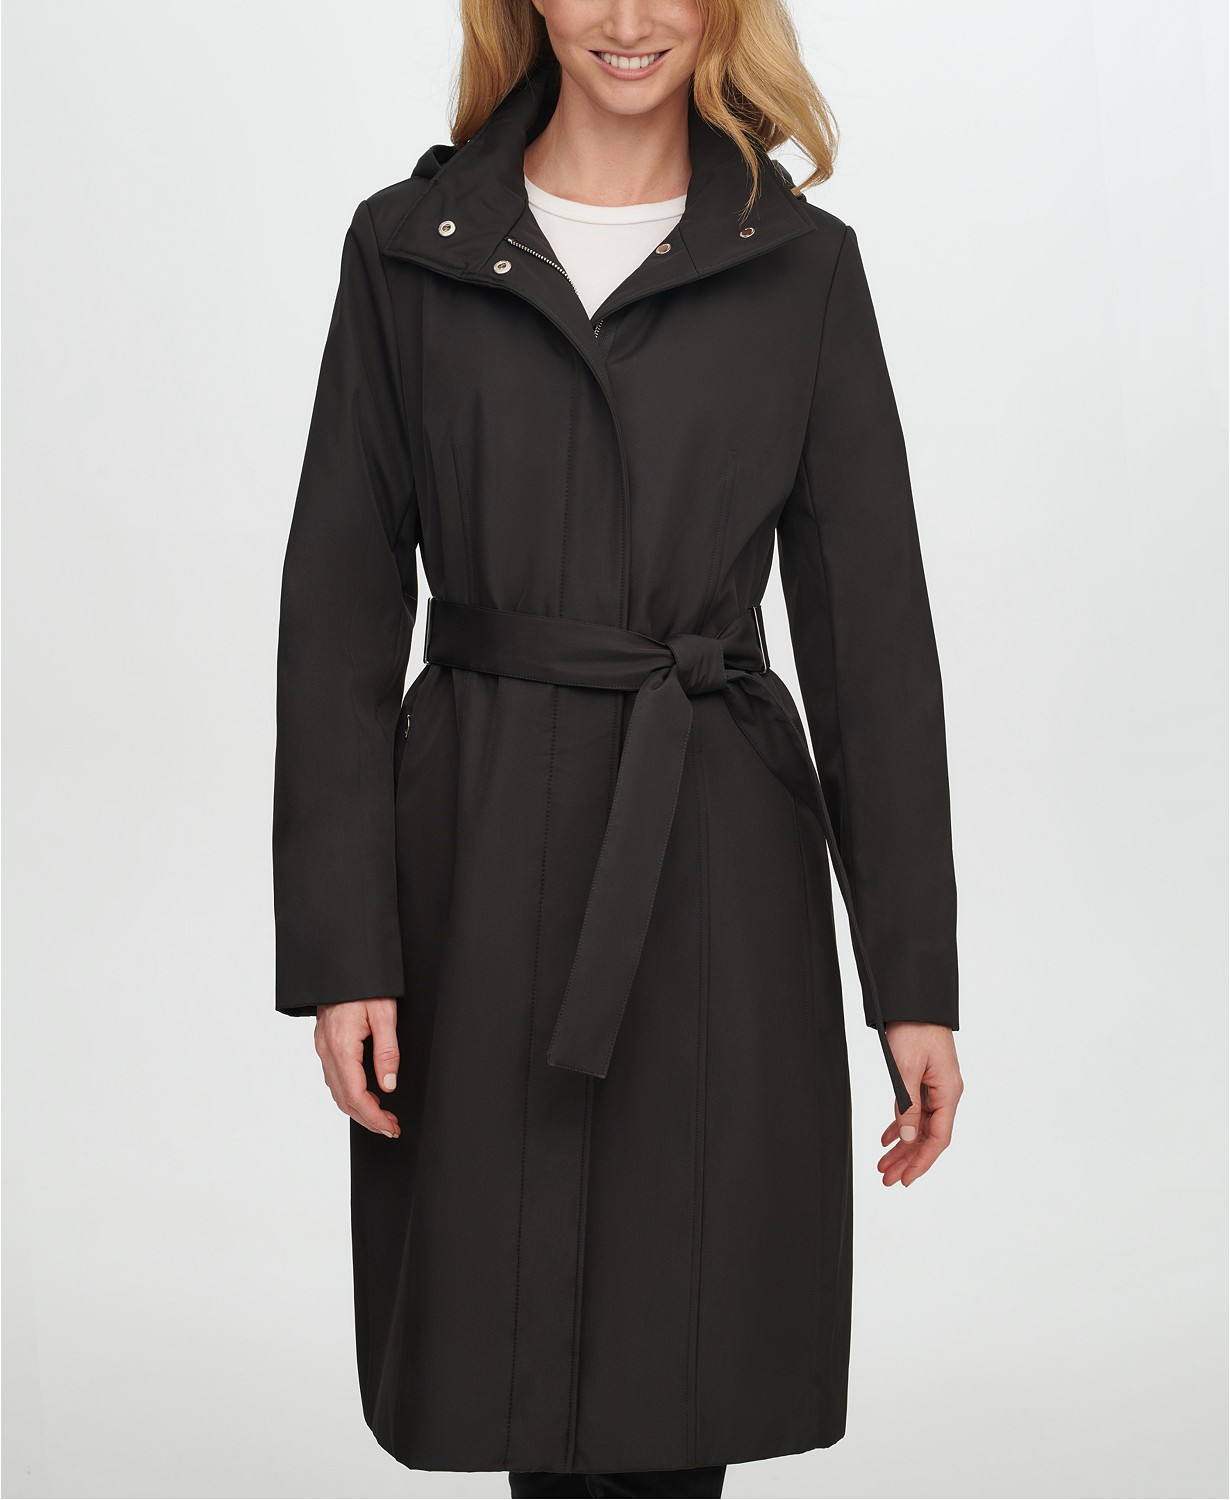 Calvin Klein Belted Hooded Raincoat $50.00 (75% off)